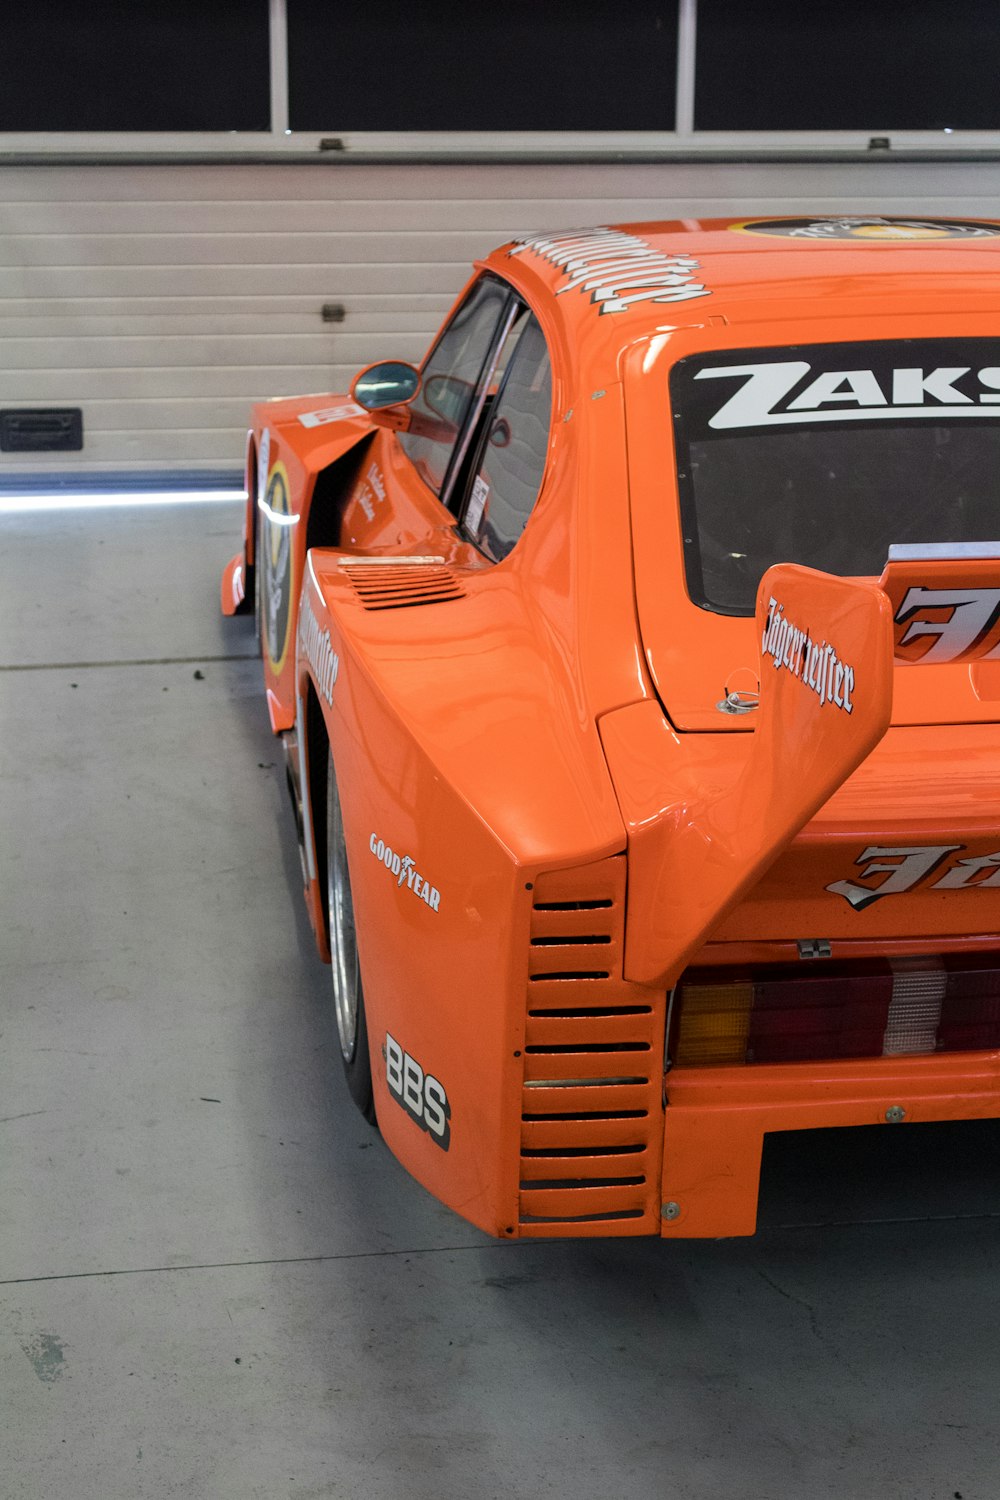 an orange sports car